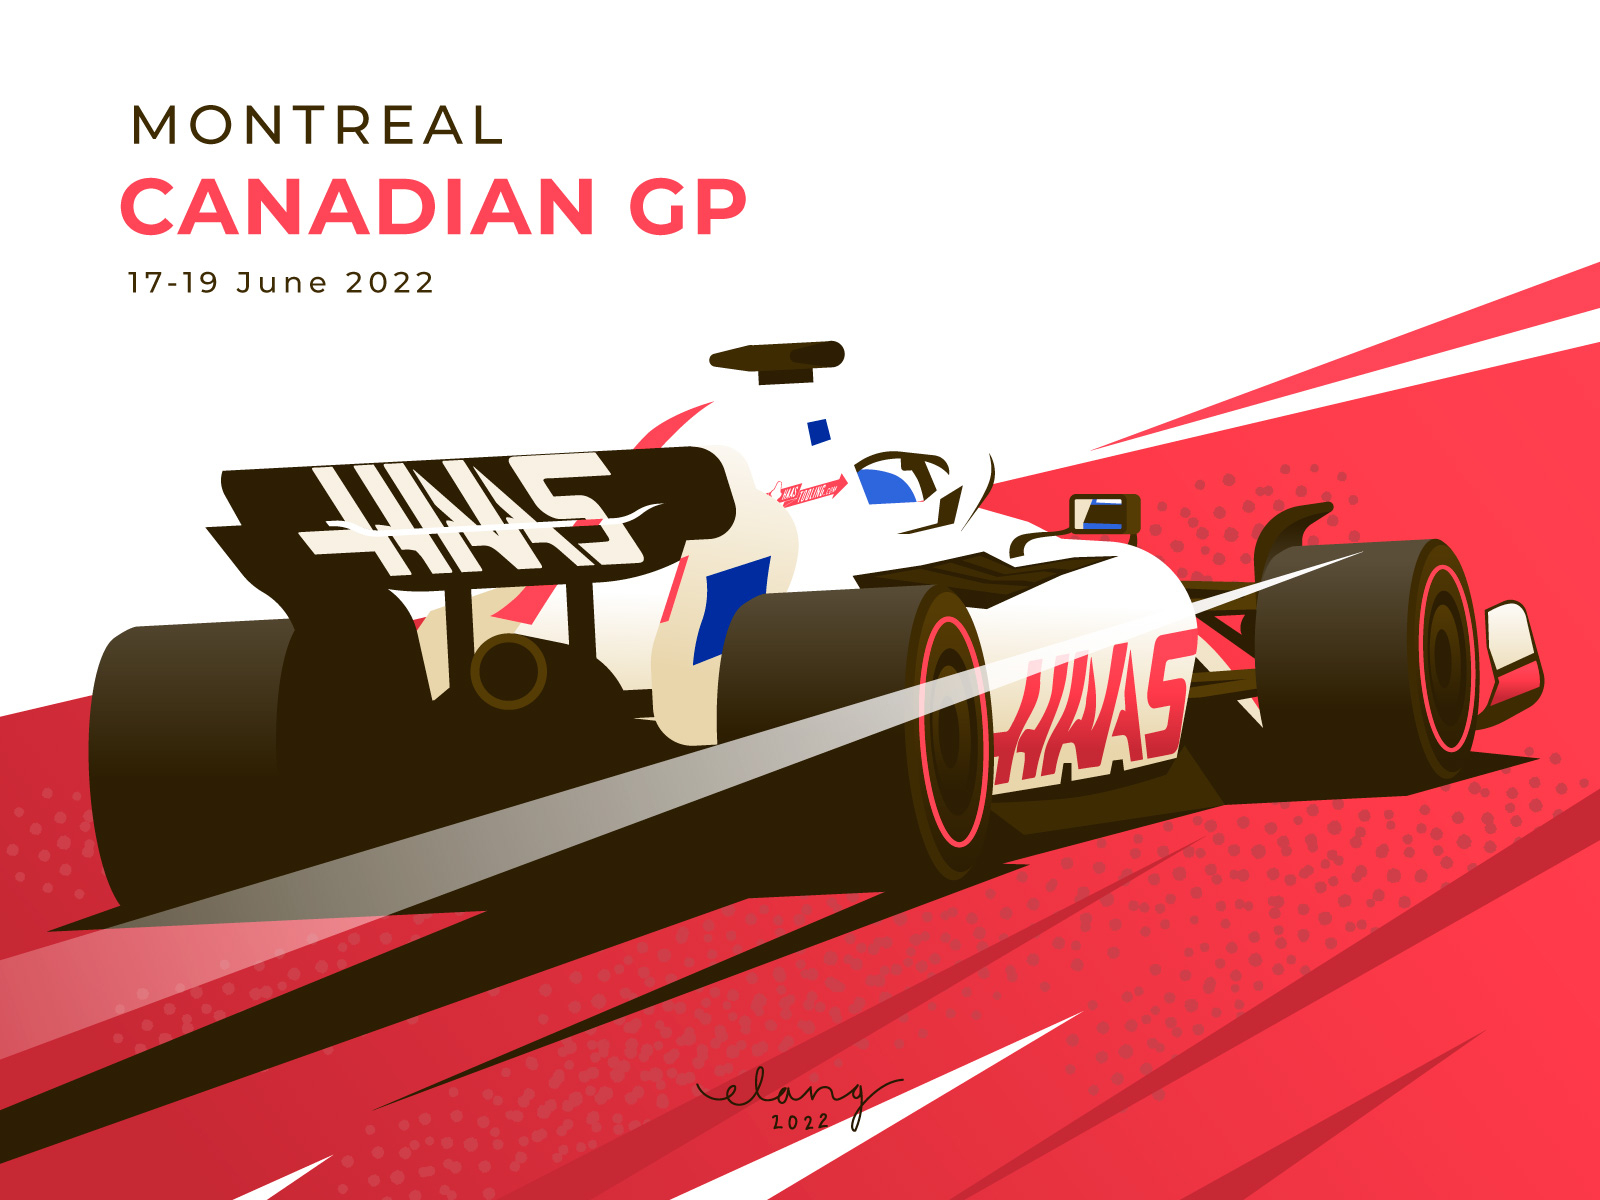 2022 Formula 1 Canadian GP Poster by elang prakoso on Dribbble